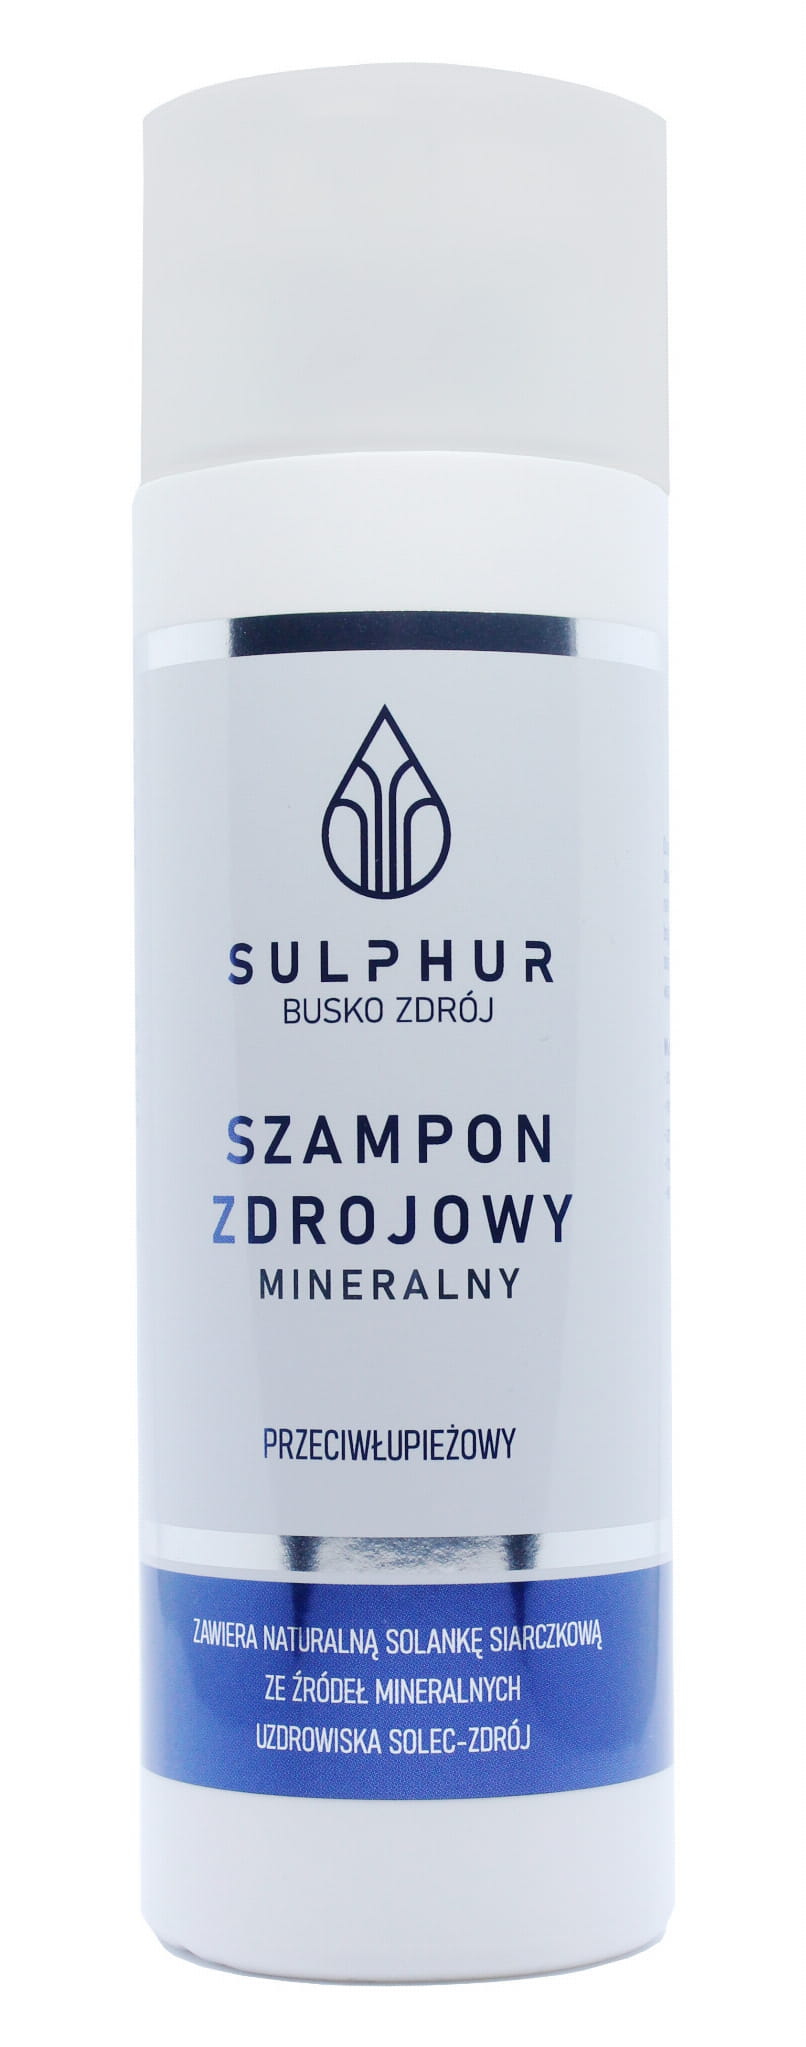 sulphur zdrój szampon cena